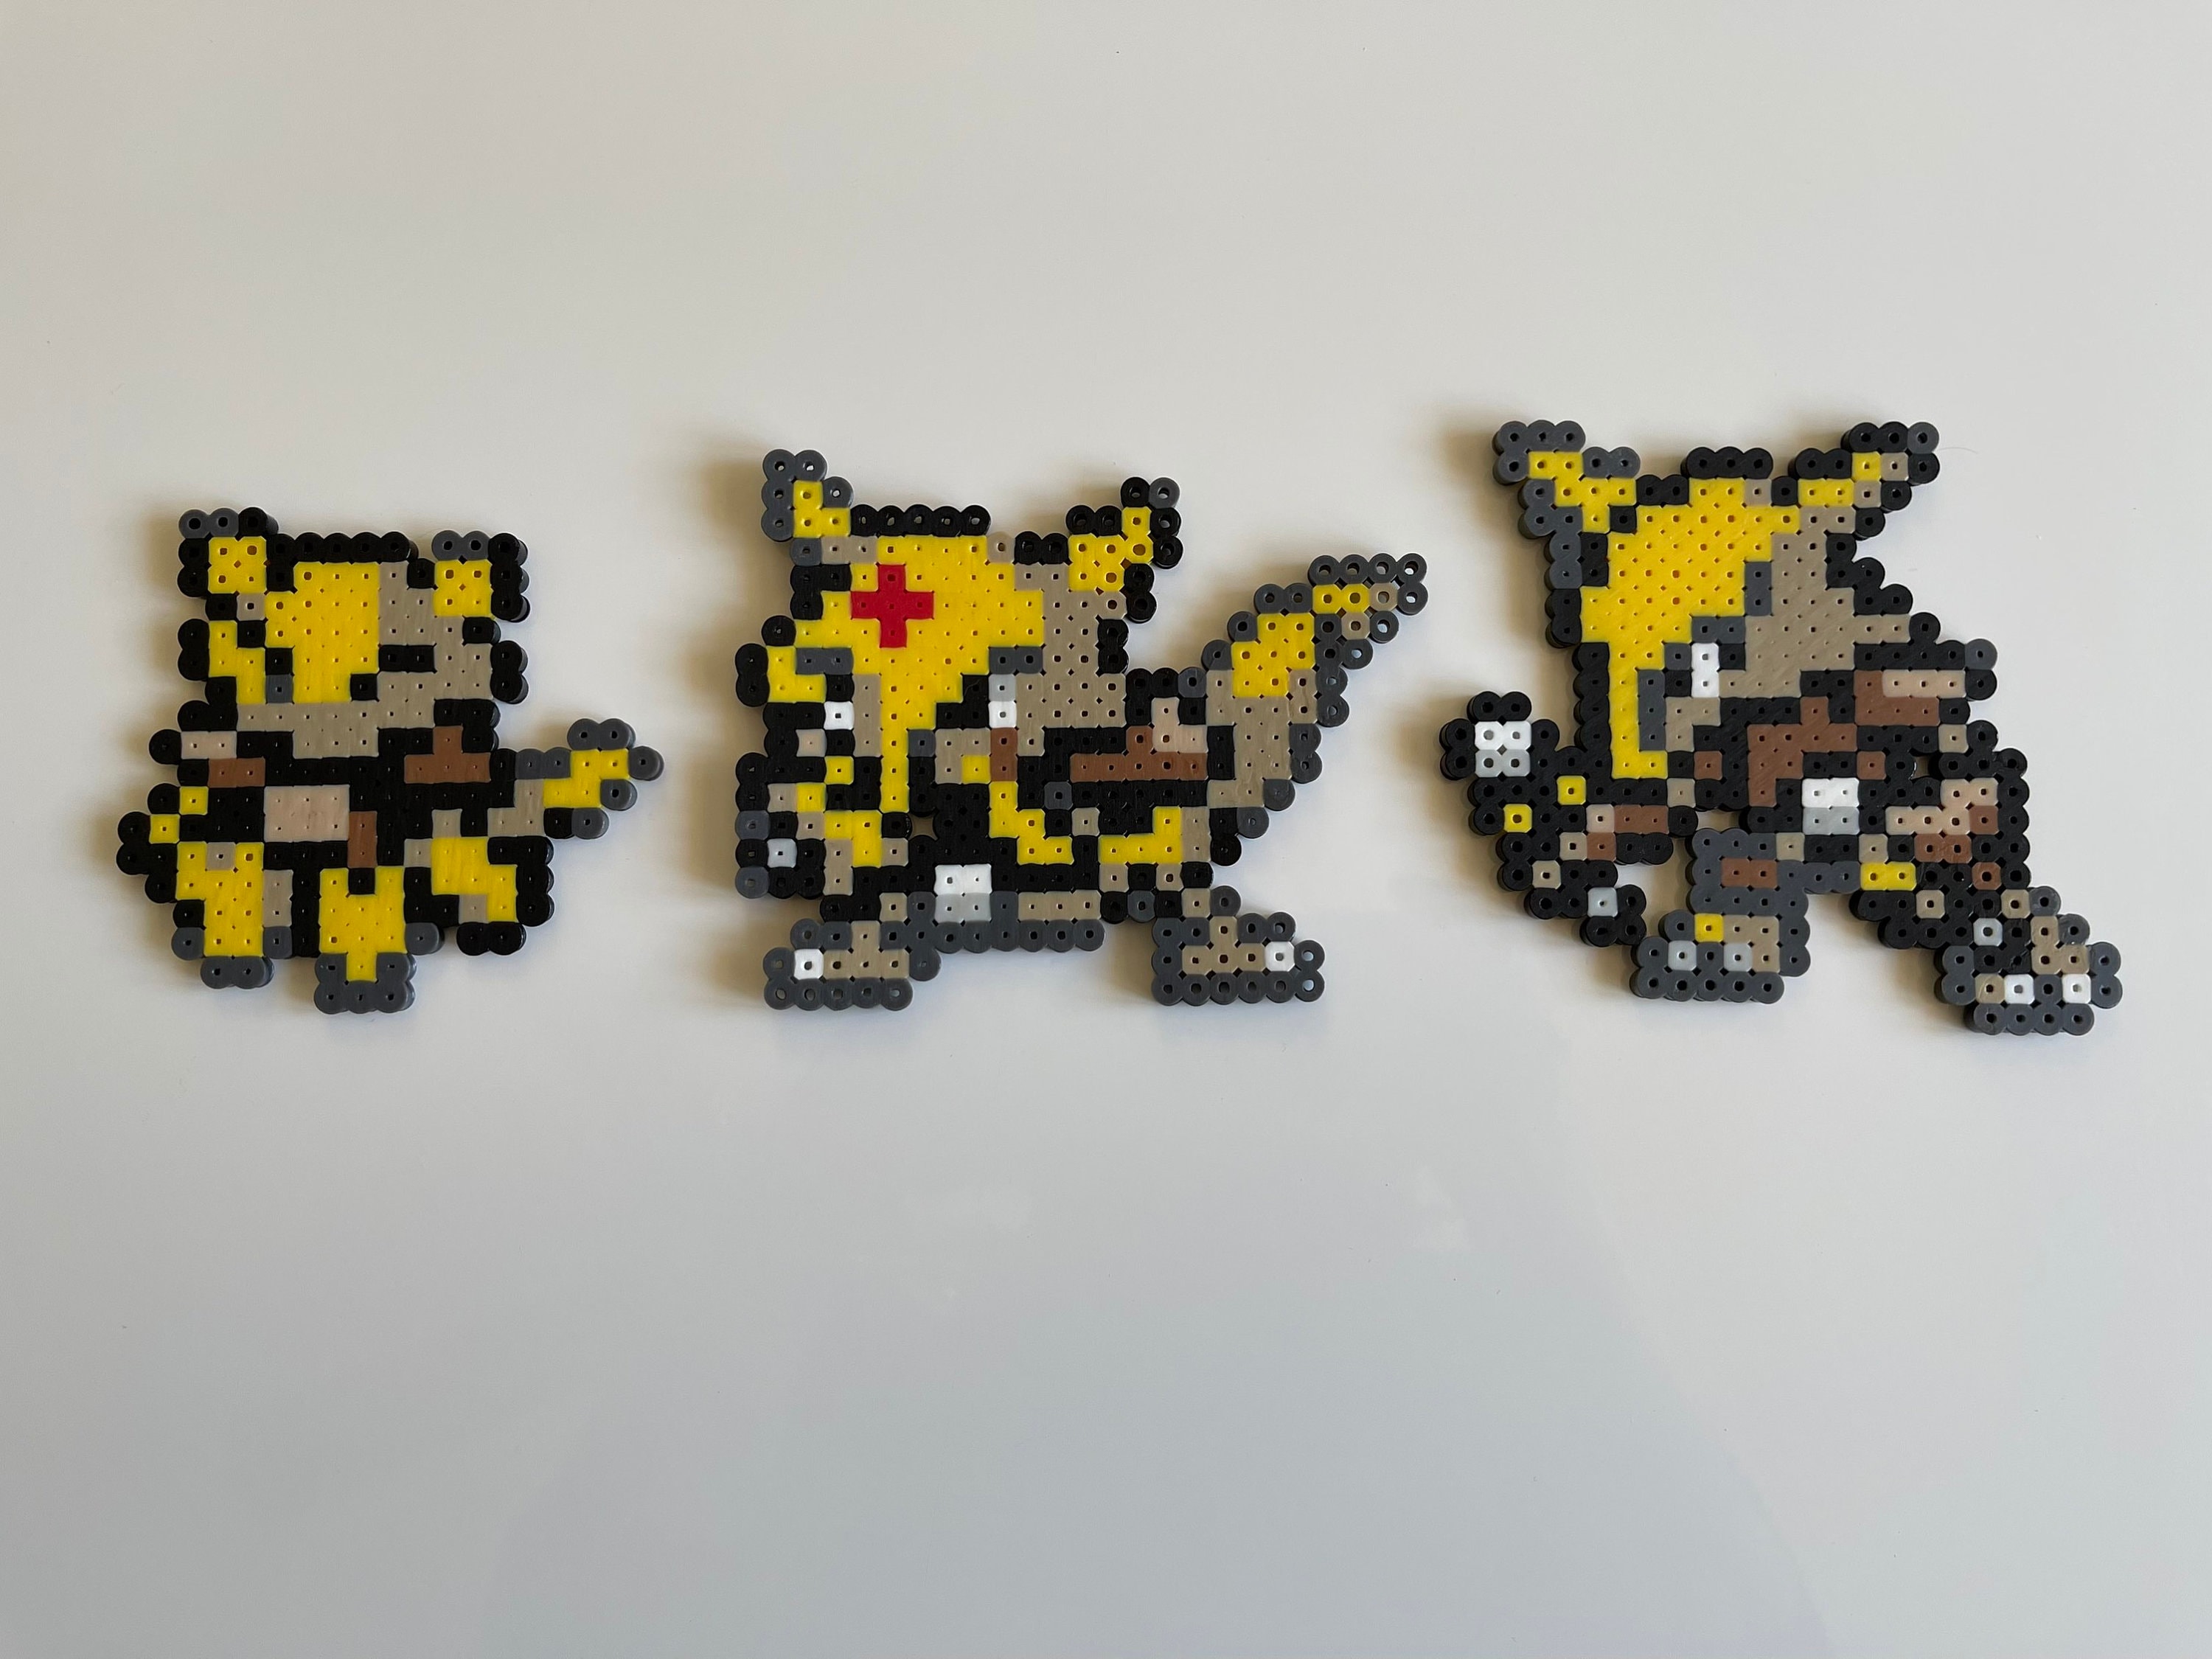 Pikachu Evolution Pokémon Perler Fuse Bead Pixel Art Sprite -  Finland